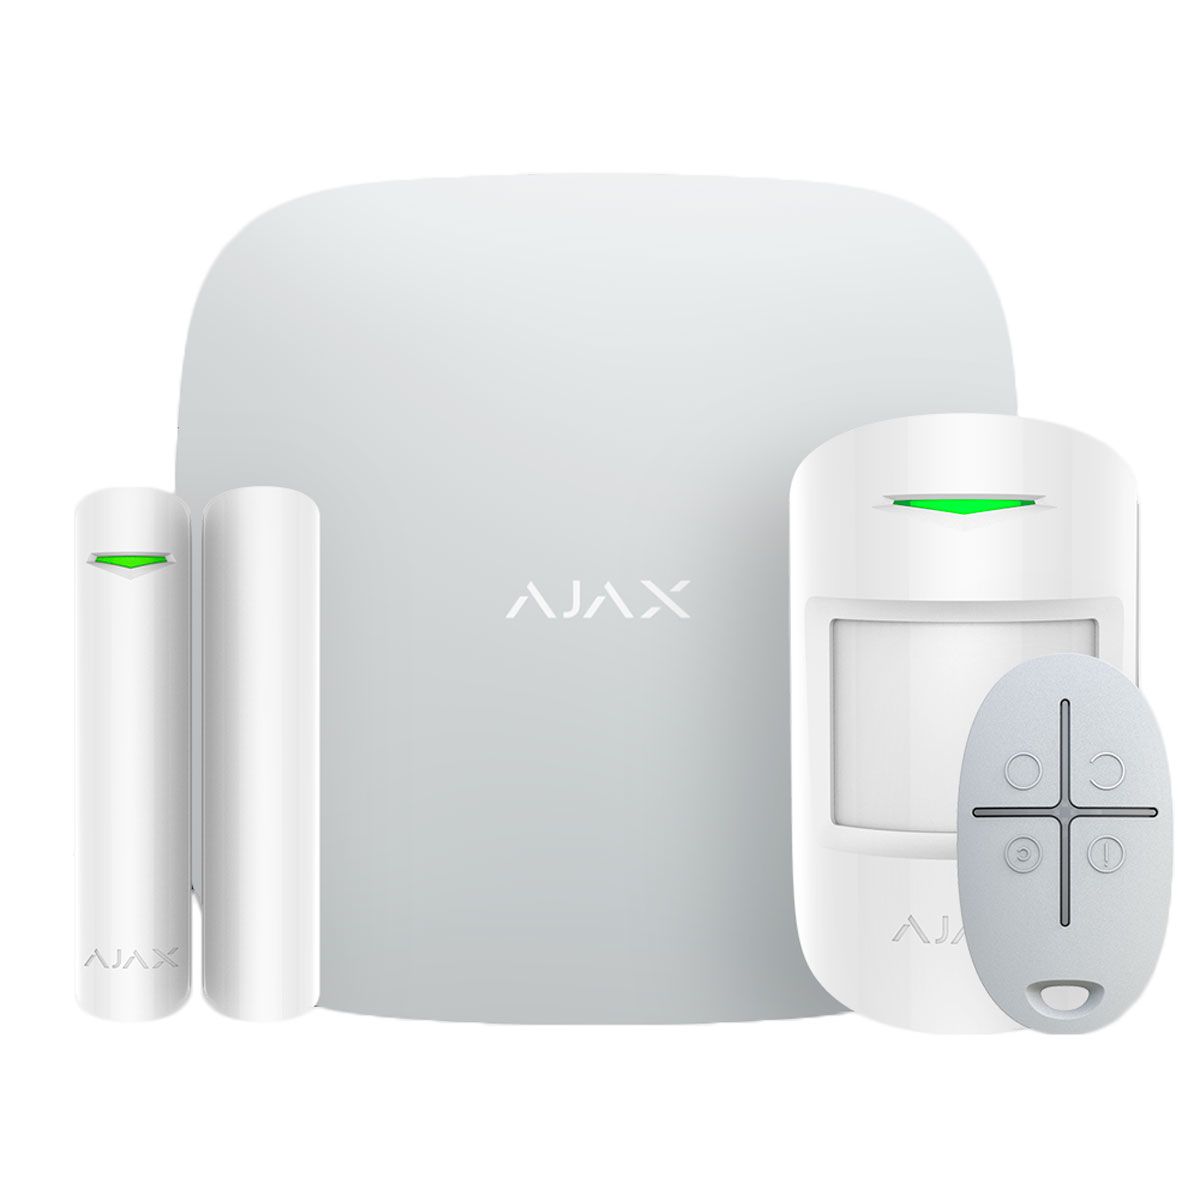 Ajax StarterKitl Plus (white) стартовый комплект